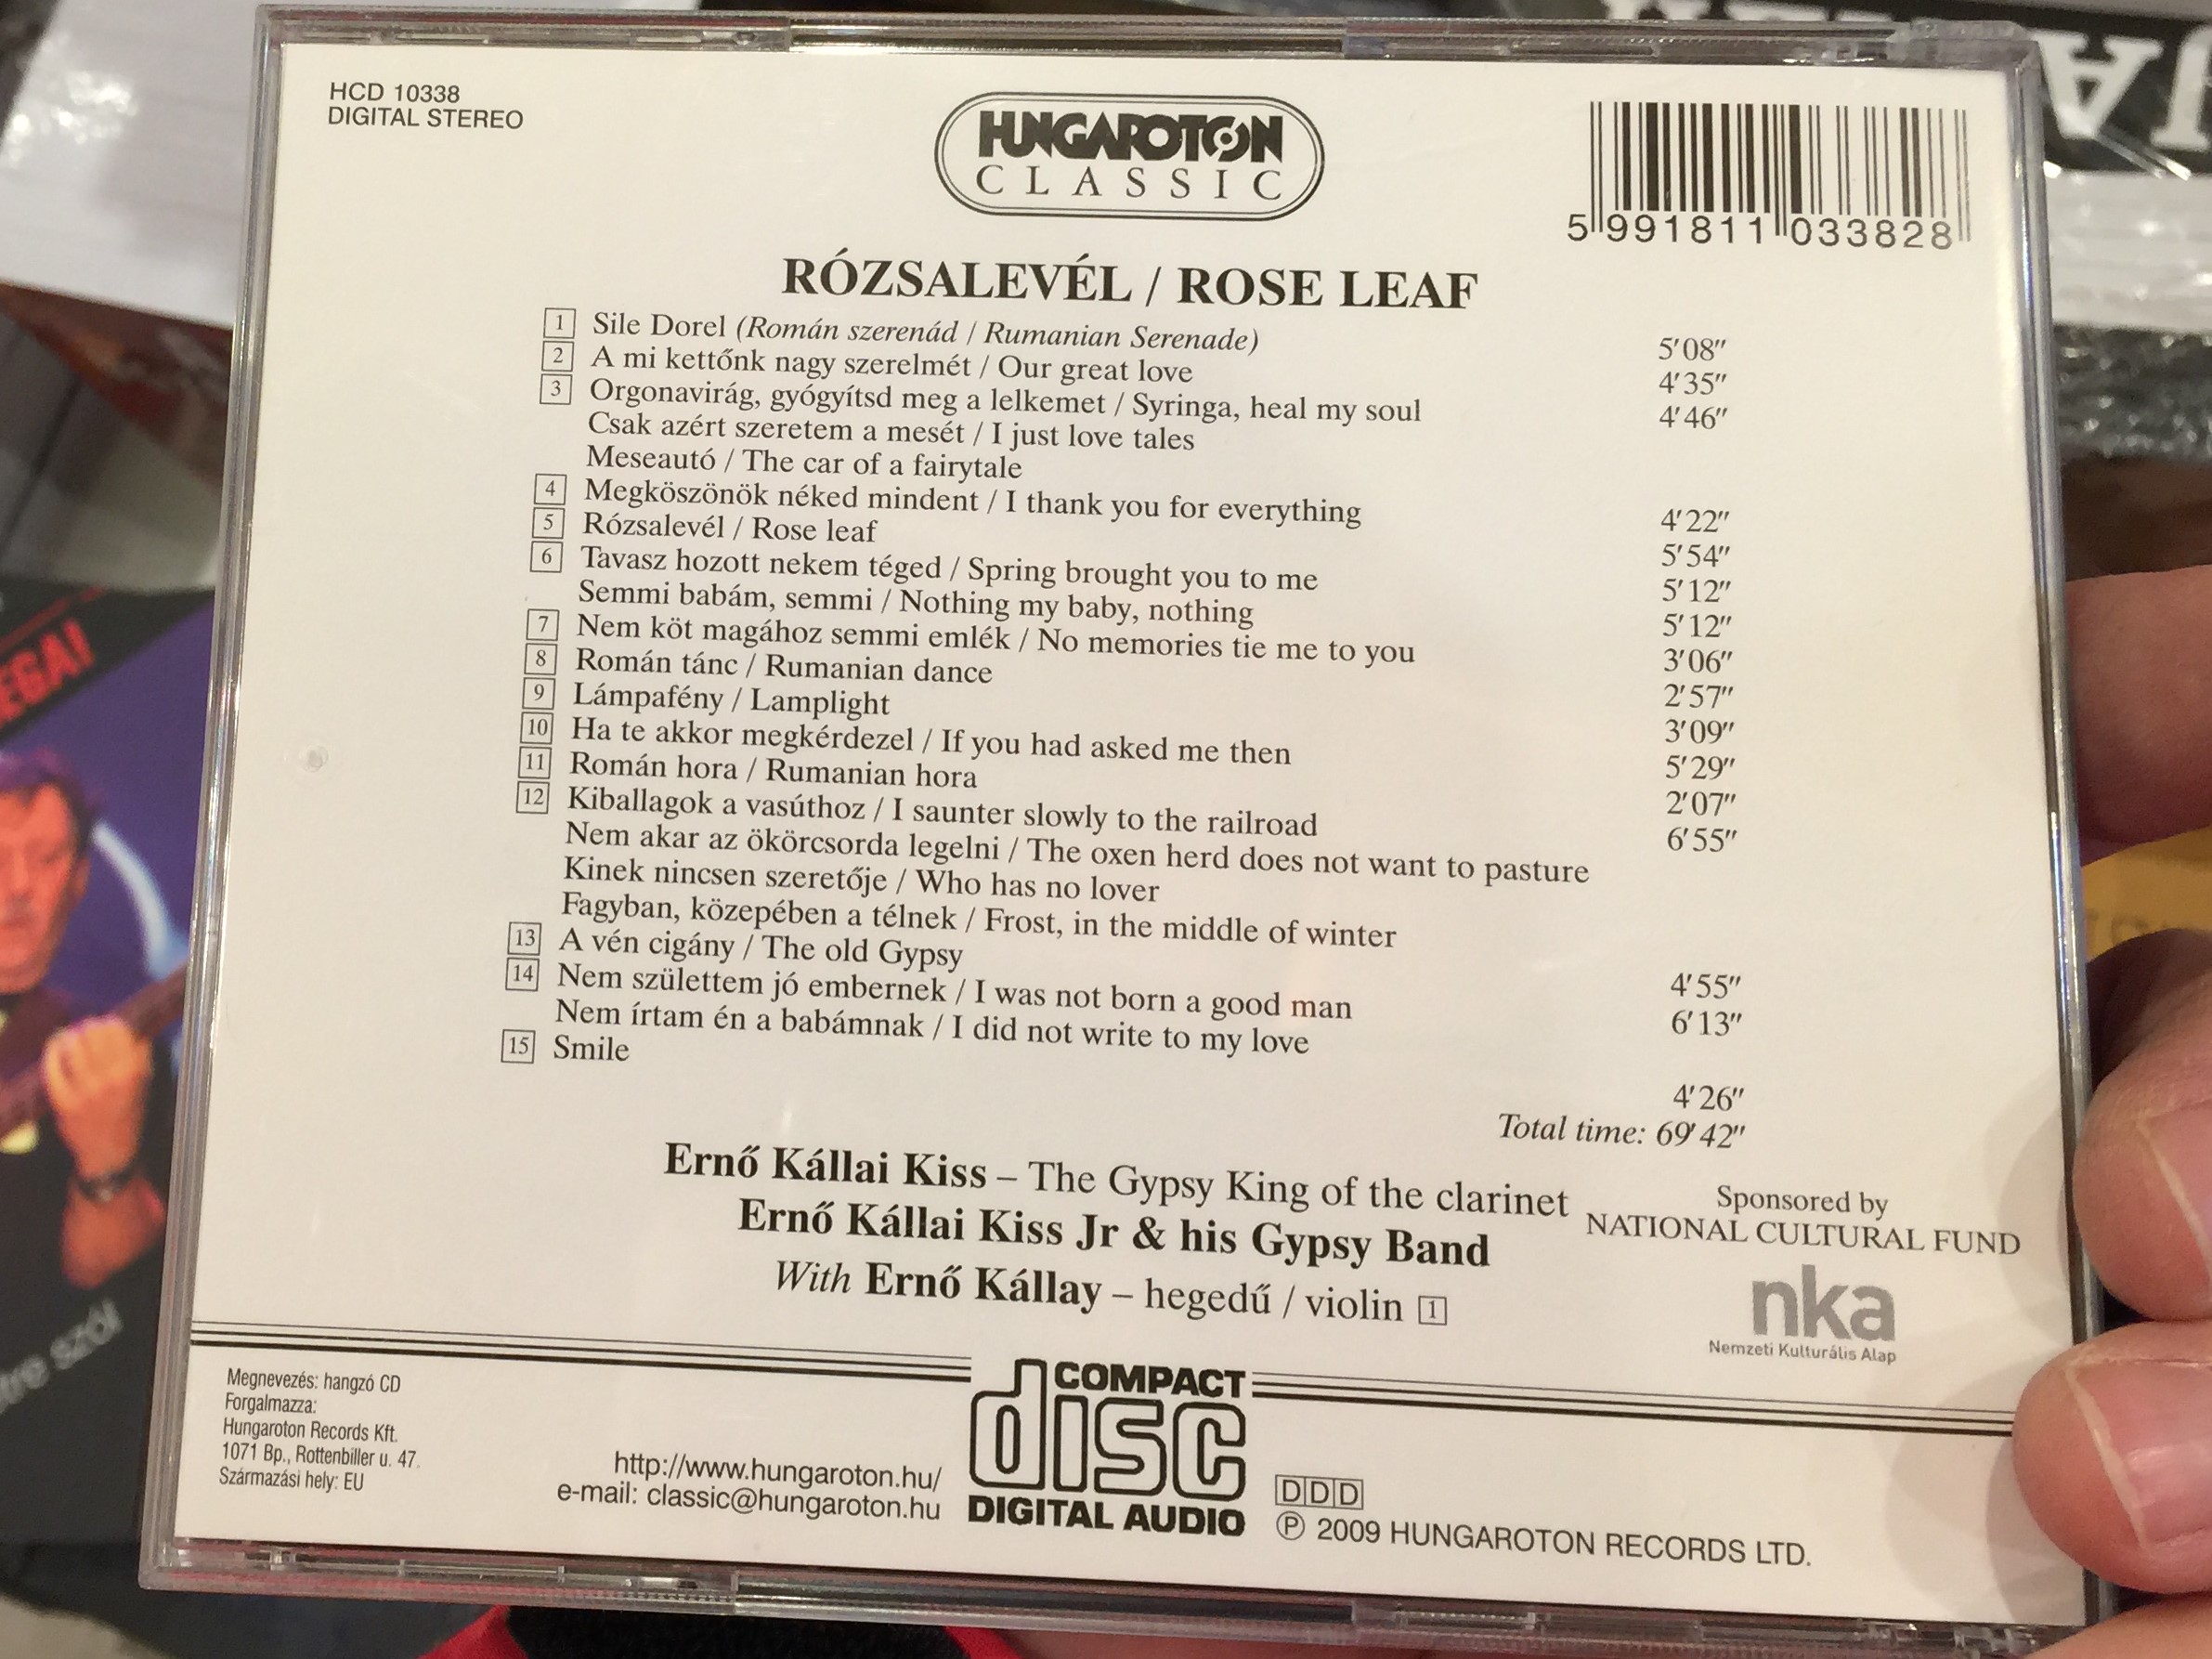 rozsalevel-rose-leaf-erno-kallai-kiss-the-gypsy-king-of-the-clarinet-erno-kallai-kiss-jr.-his-gypsy-band-erno-kallay-violin-hungaroton-classic-audio-cd-2009-strereo-hcd-10338-2-.jpg